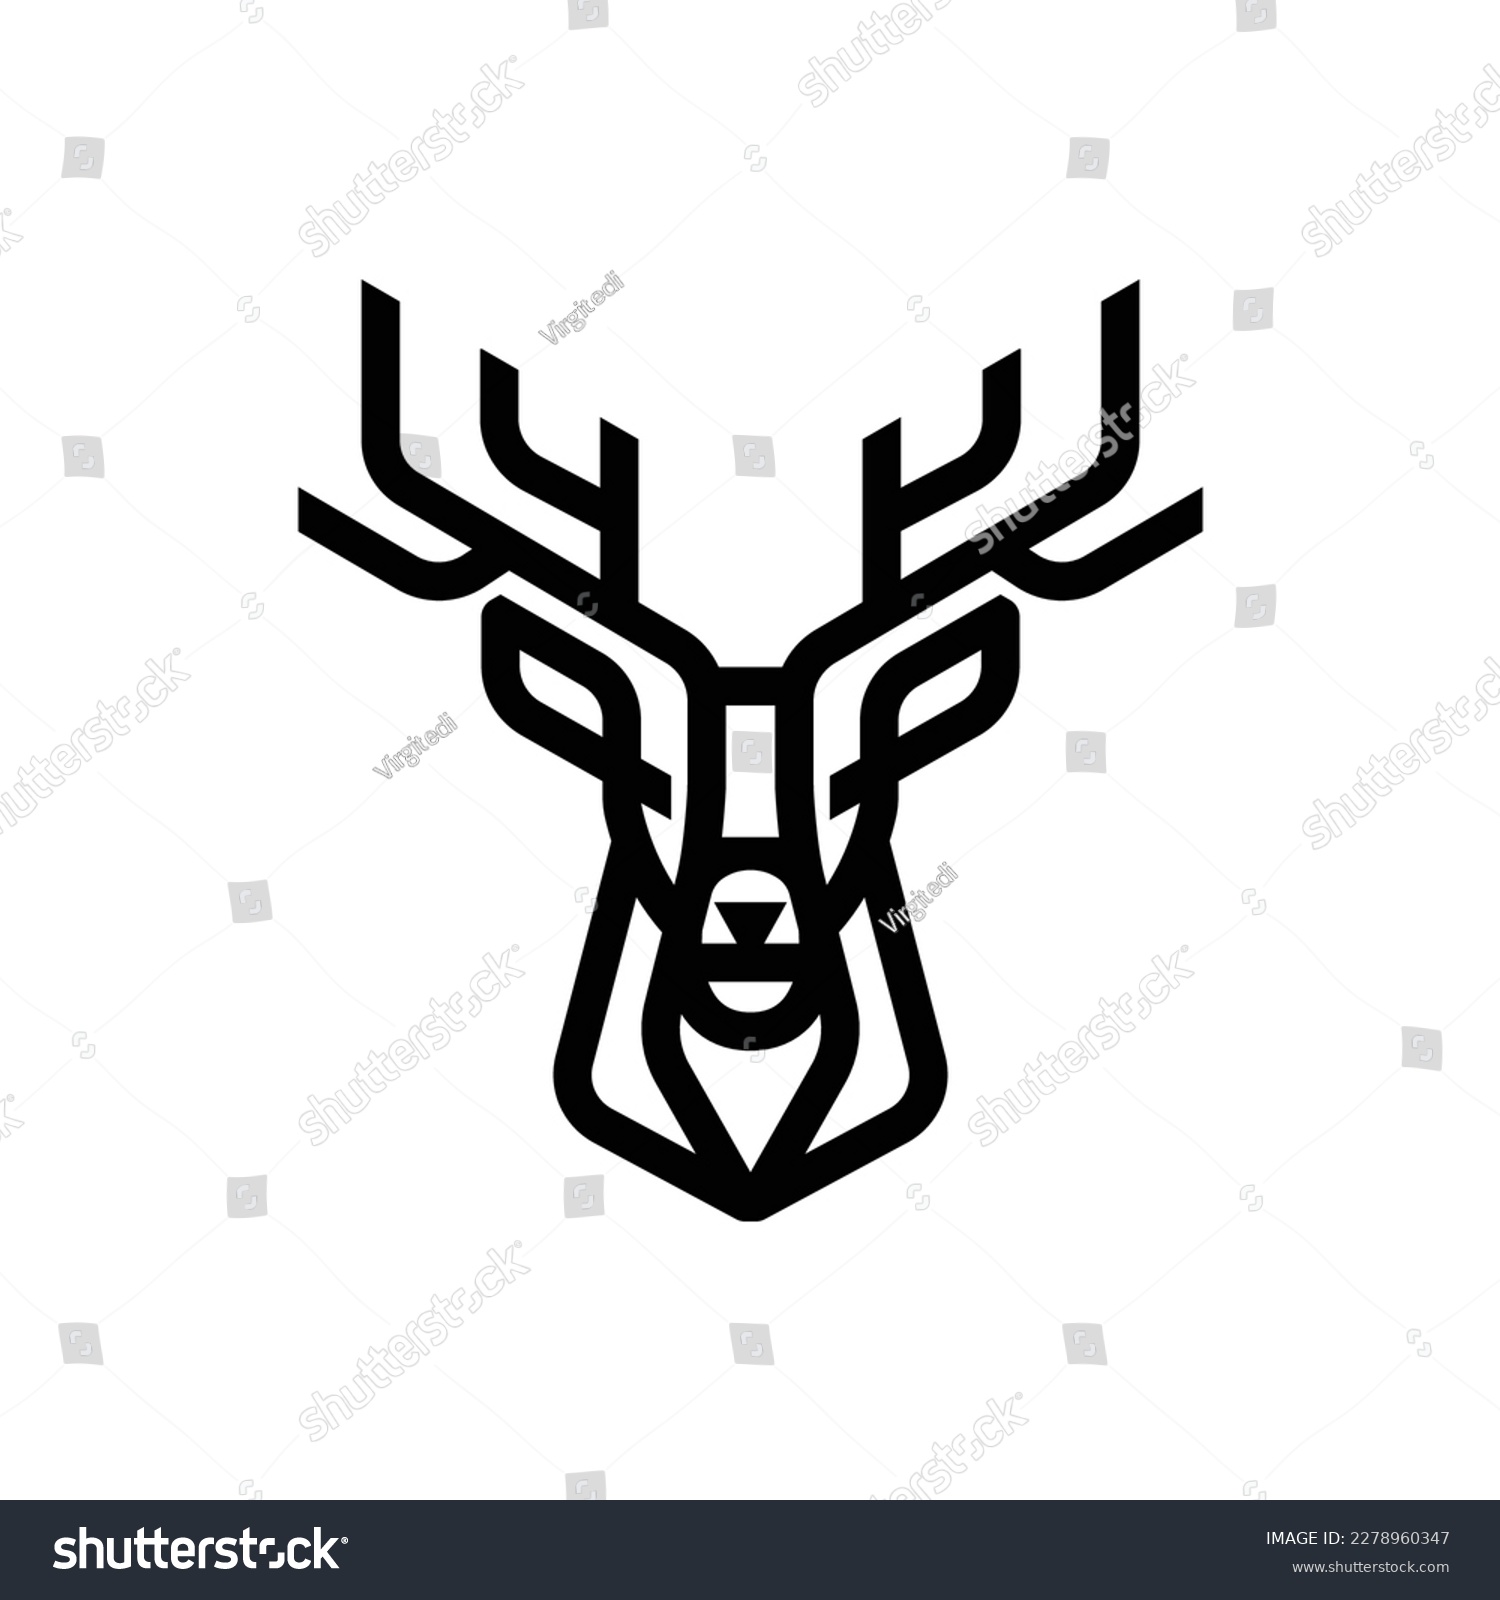 SVG of Polygonal deer head design geometric illlustration svg